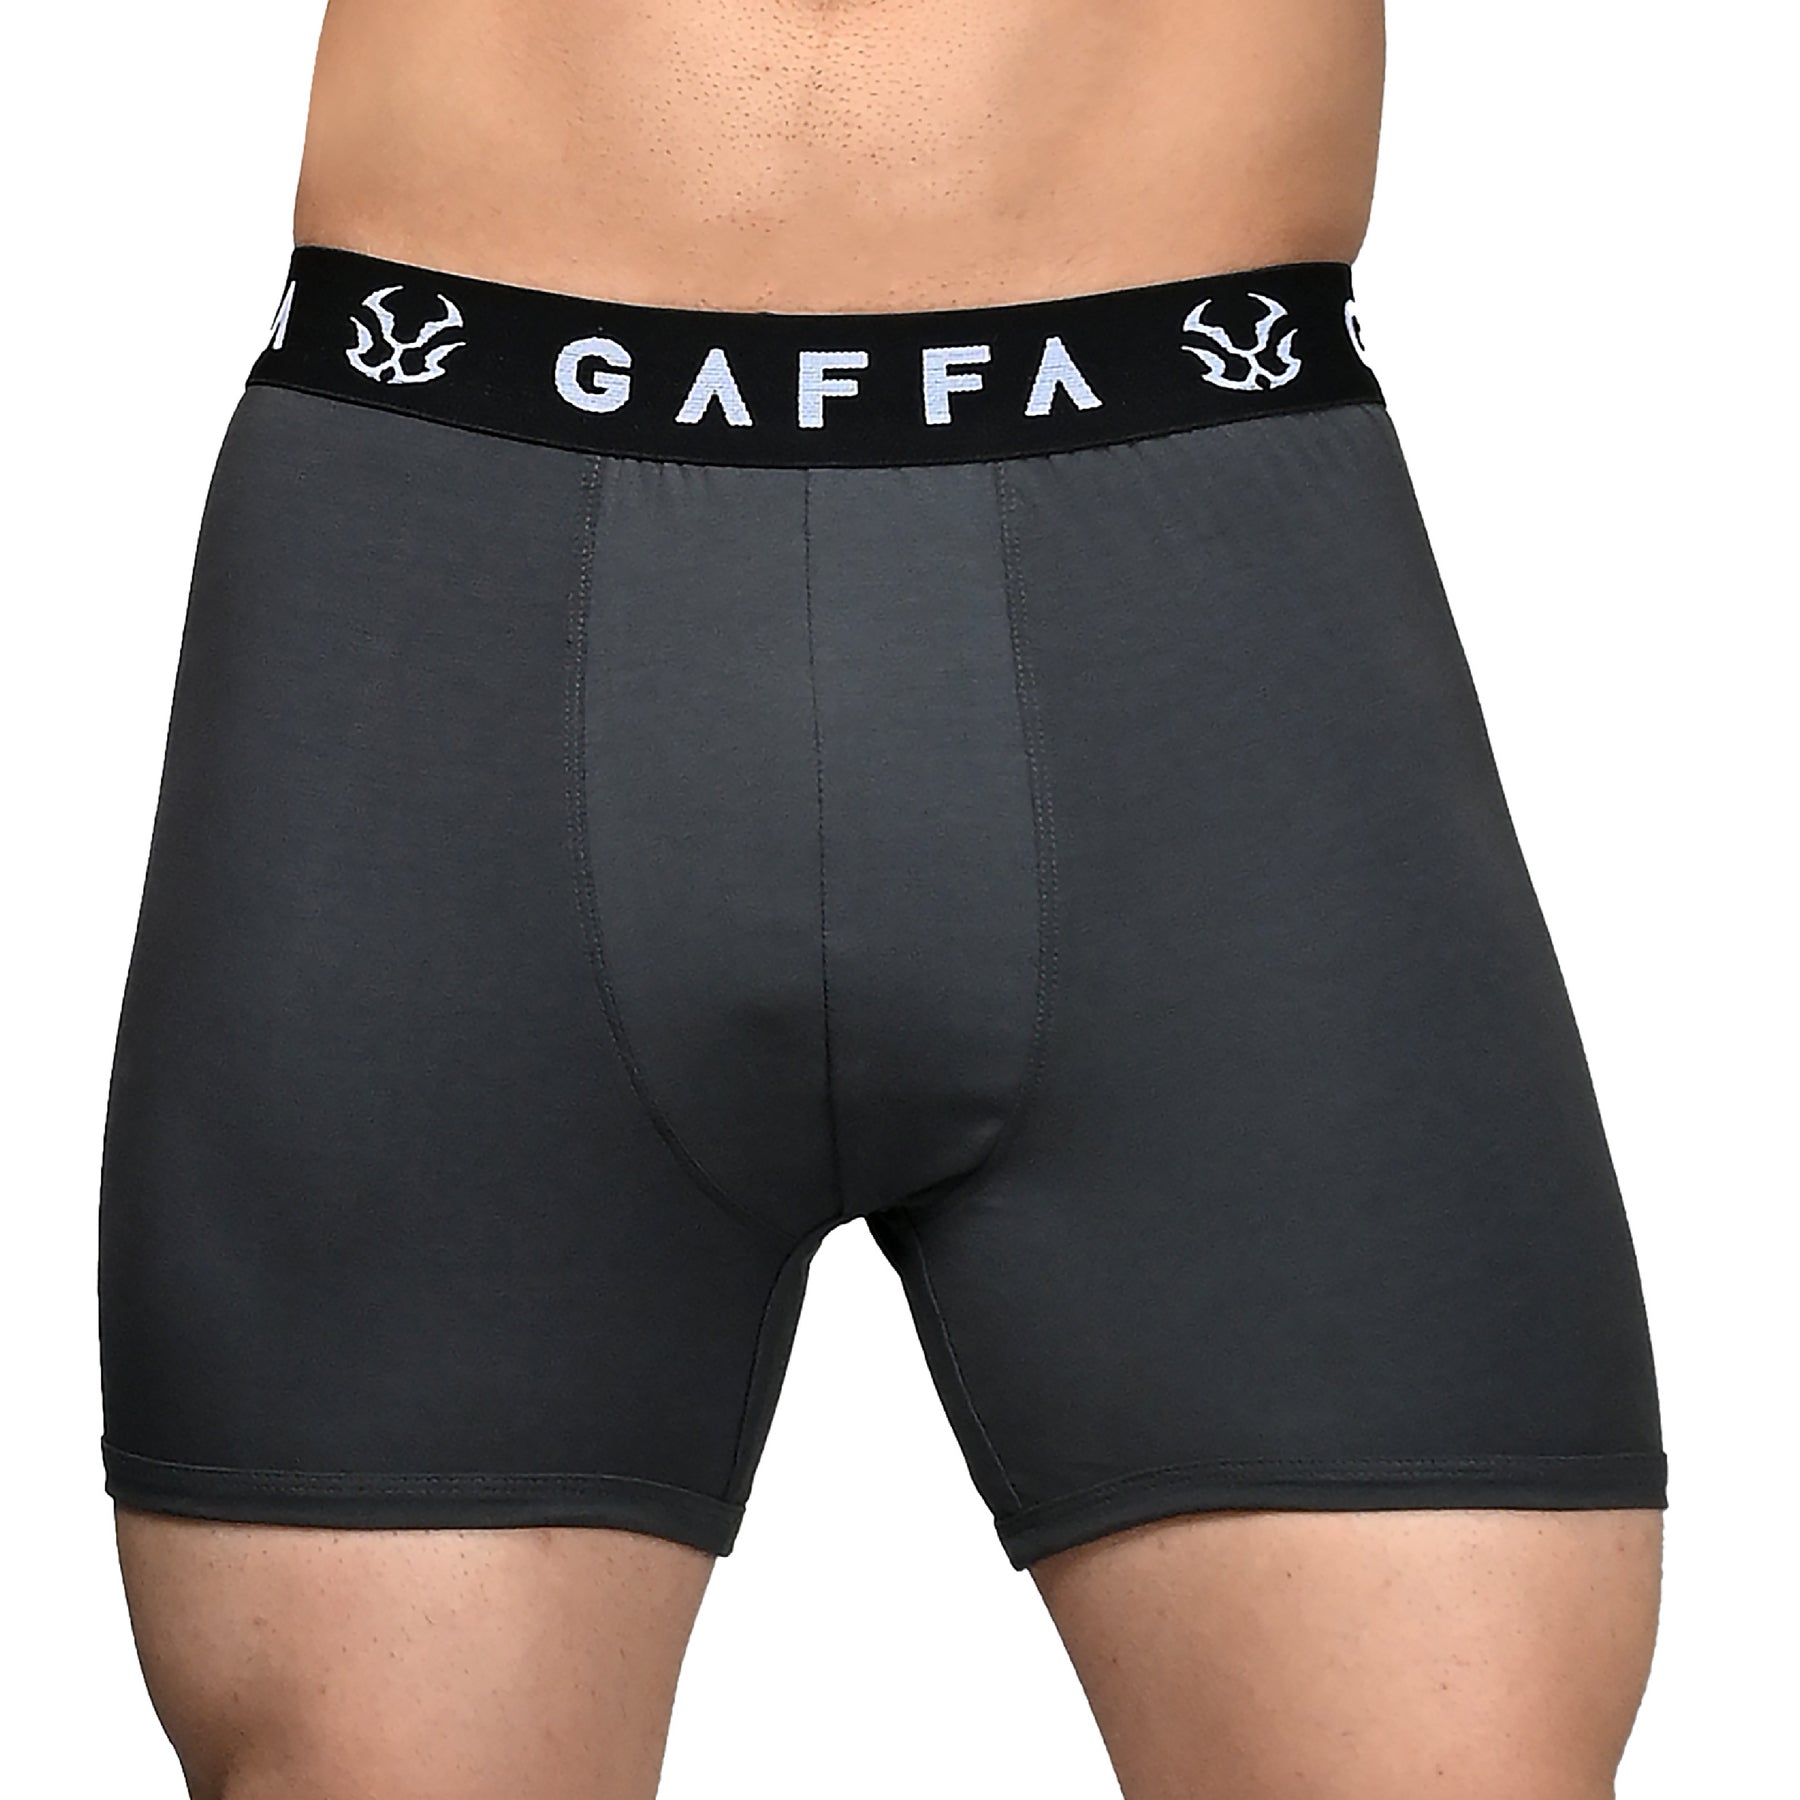 Men's Underwear Trunks Bold Black +Charcoal Grey Pack of 2